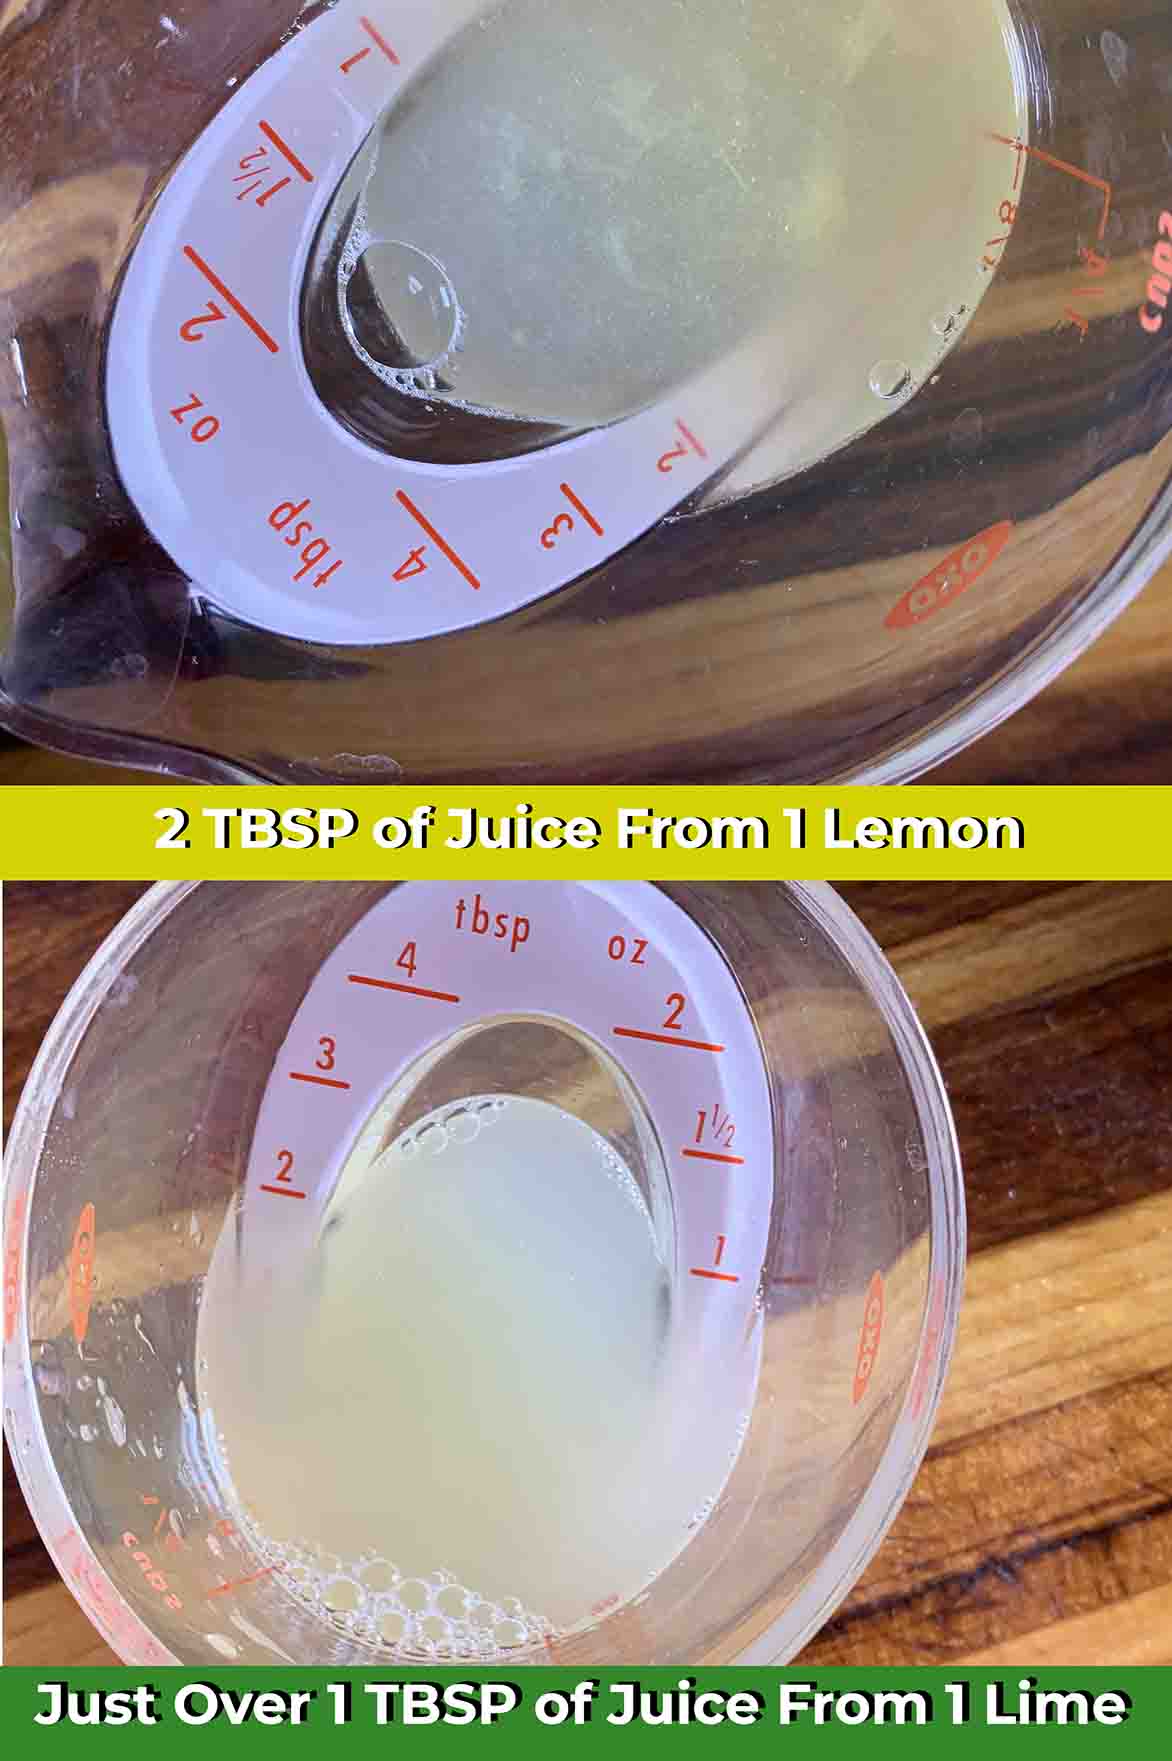 The Chef'n lemon squeezer yields 2 tbsp of juice per lemon while the Chef'n lime squeezer yields just over 1 tbsp of lime juice per lime.